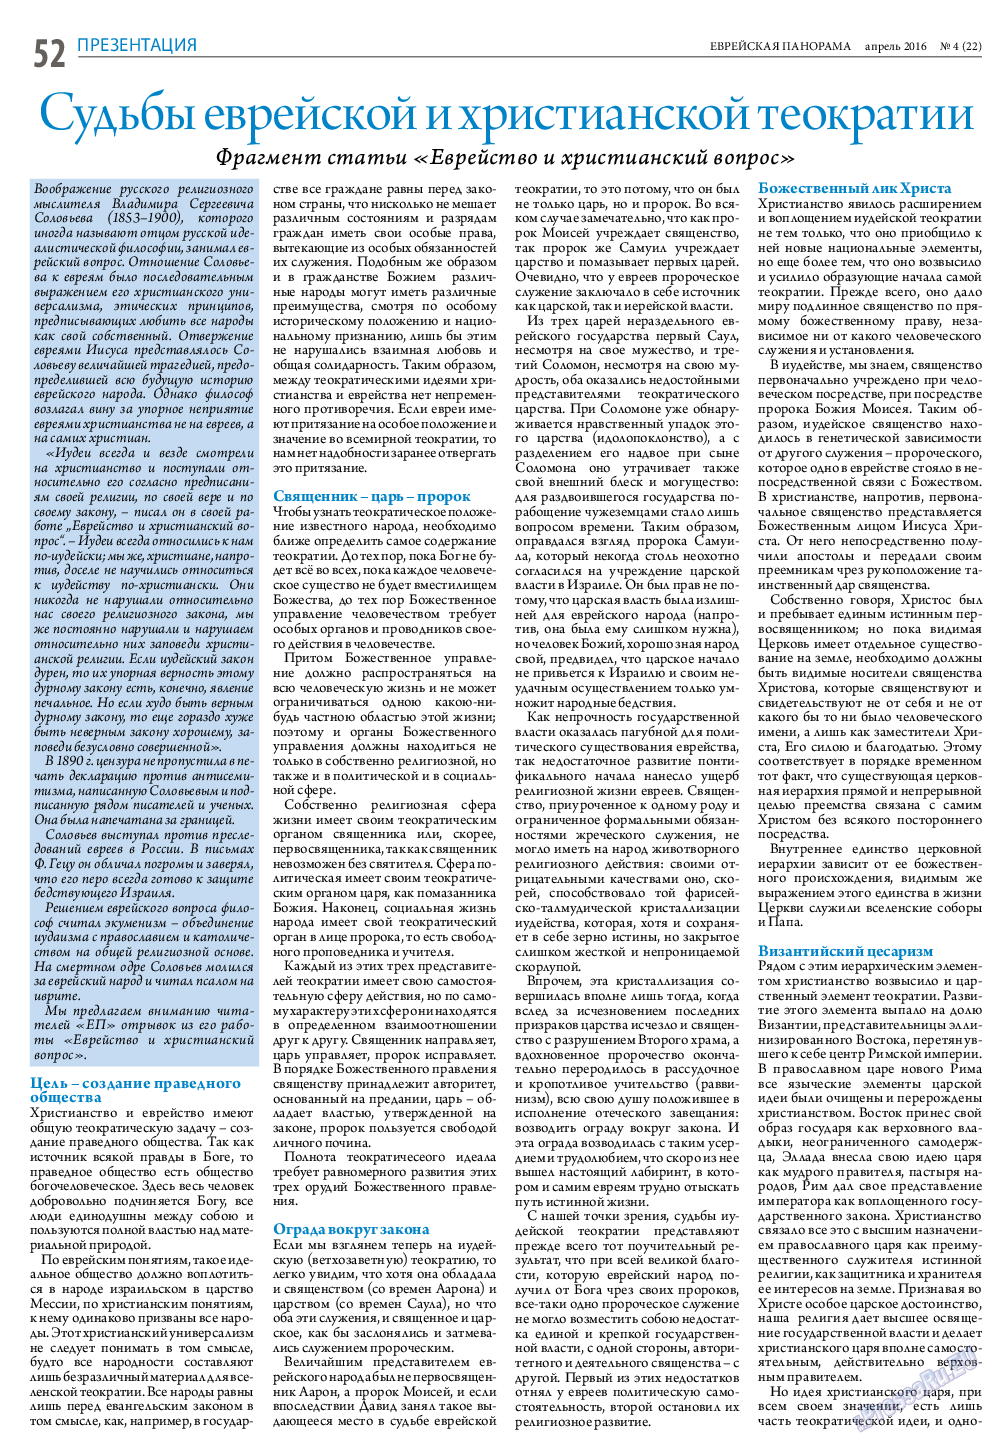 Еврейская панорама, газета. 2016 №4 стр.52